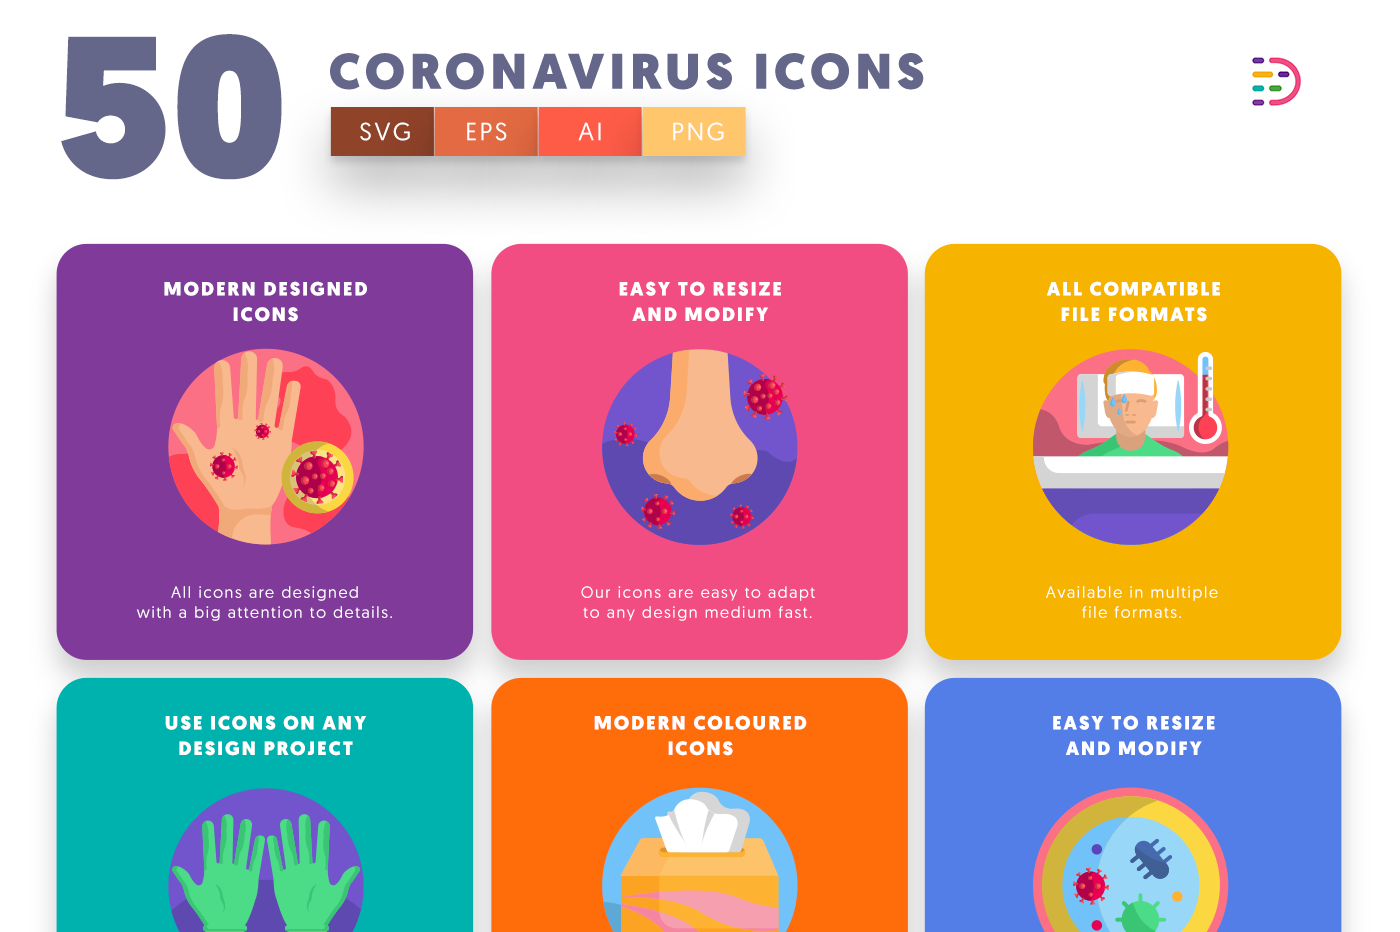 Full vector Coronavirus Transmission Icons